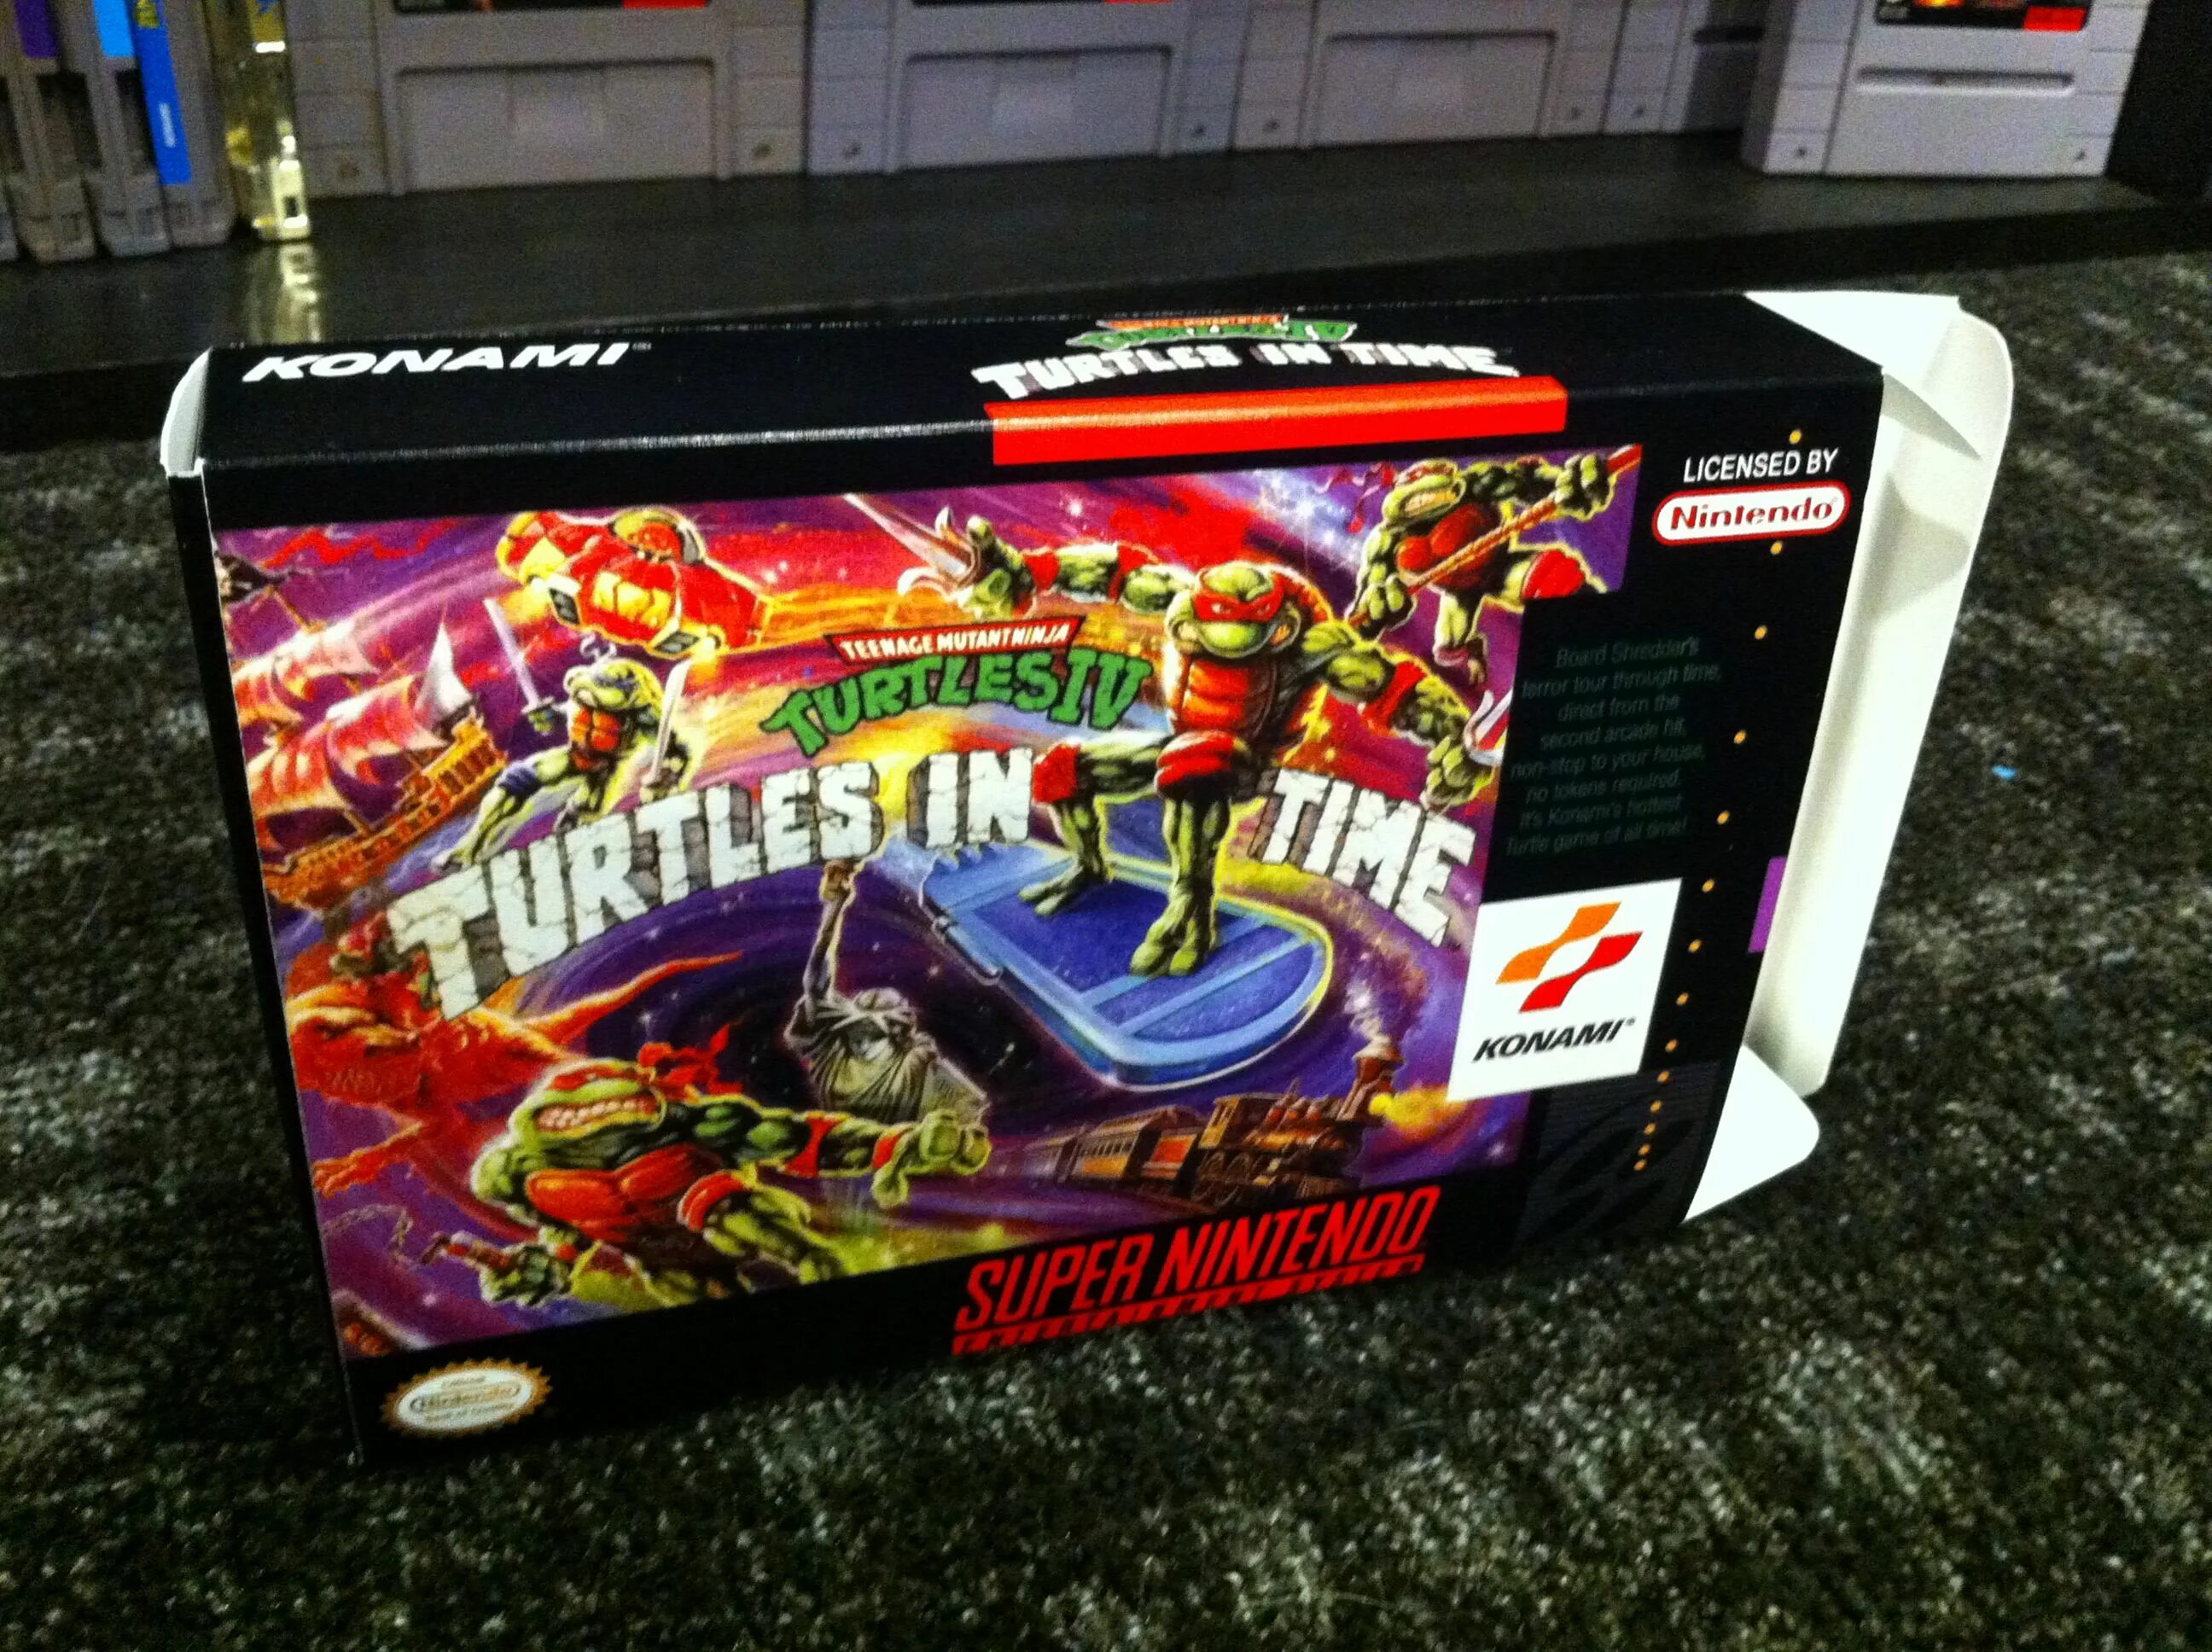 Super Famicom TMNT Turtles in time. Teenage Mutant Ninja Turtles IV - Turtles in time. Super Nintendo Turtles in time картридж. Snes teenage Mutant Ninja Turtles 4.